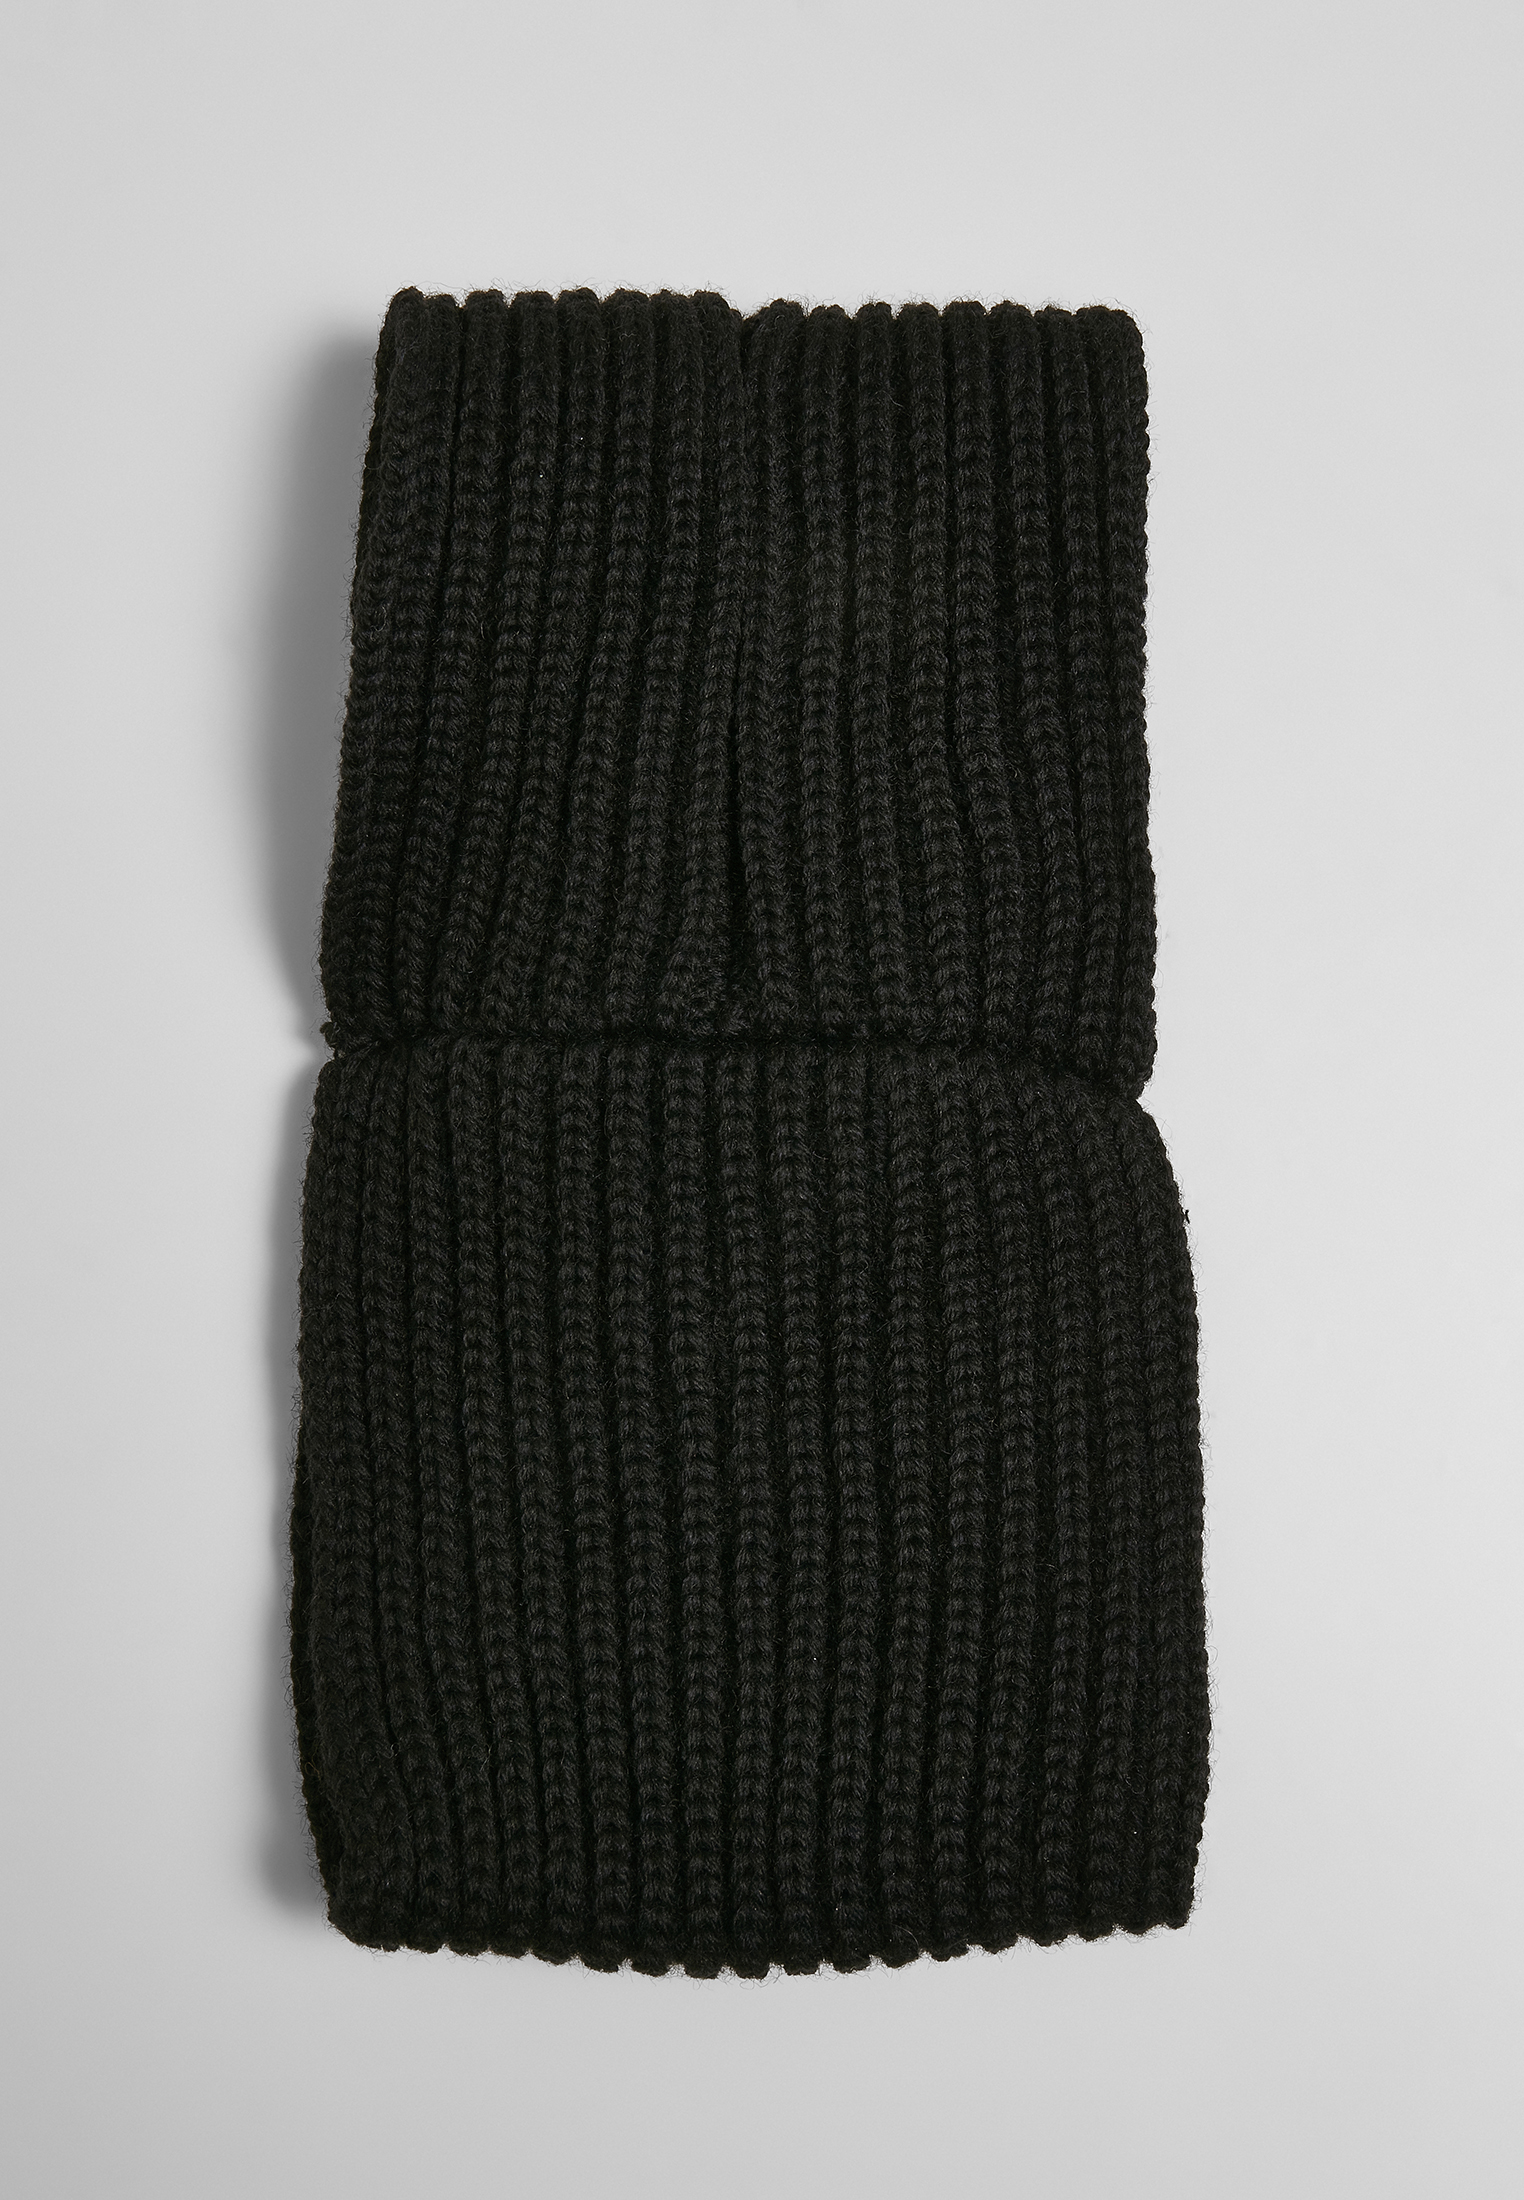 M?tzen Knitted Headband in Farbe black